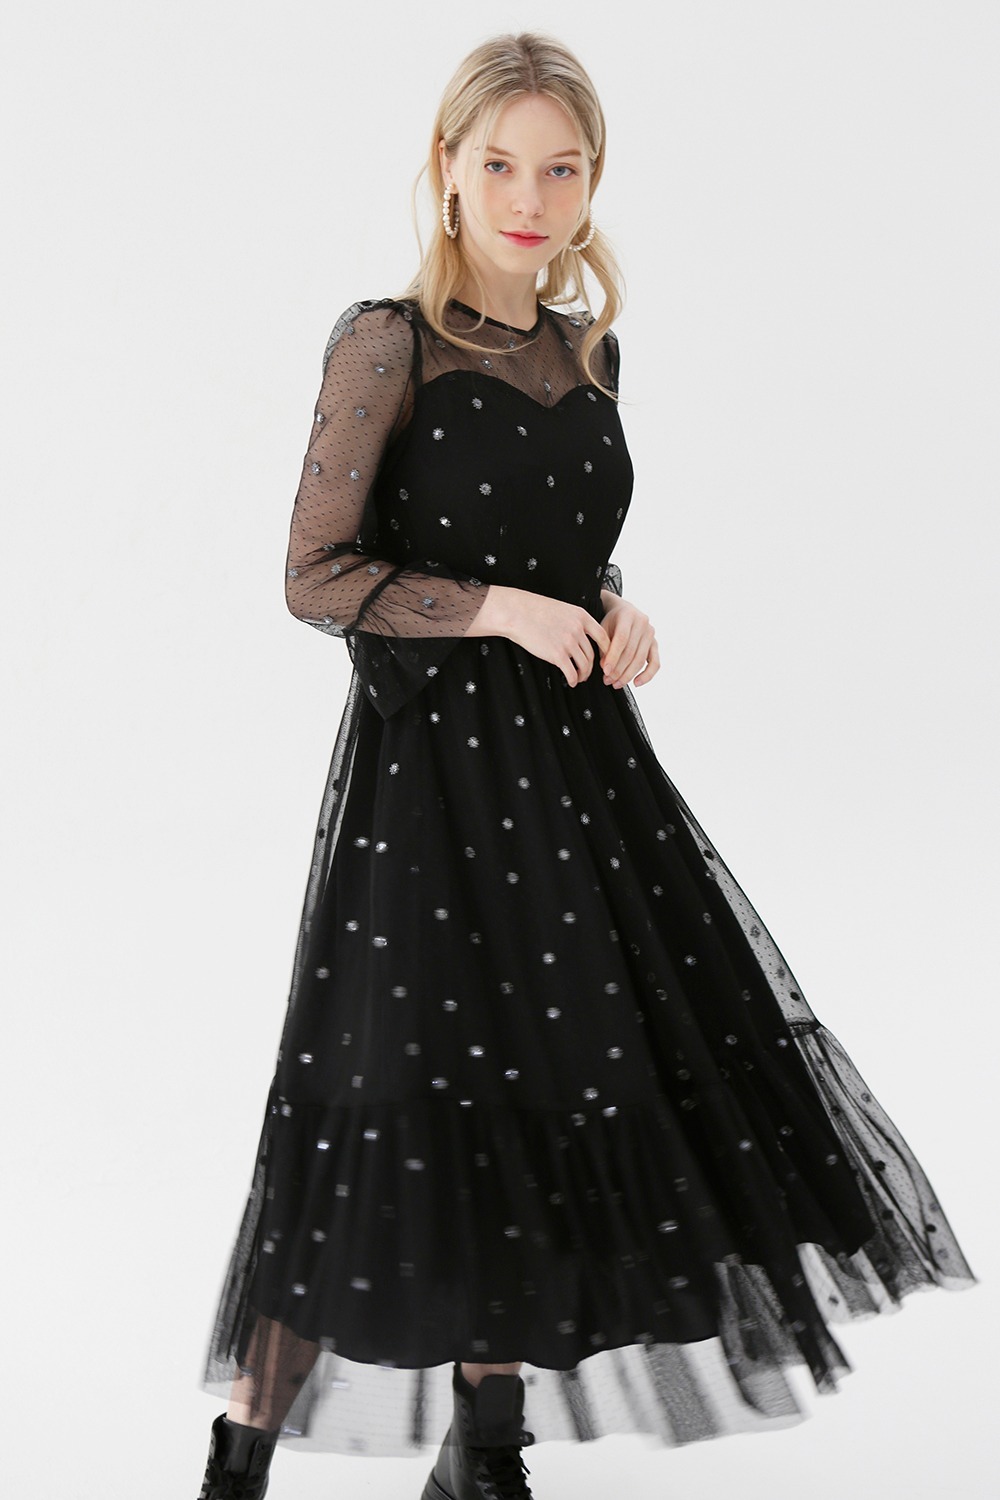 Jewel embroidery dress (Black)